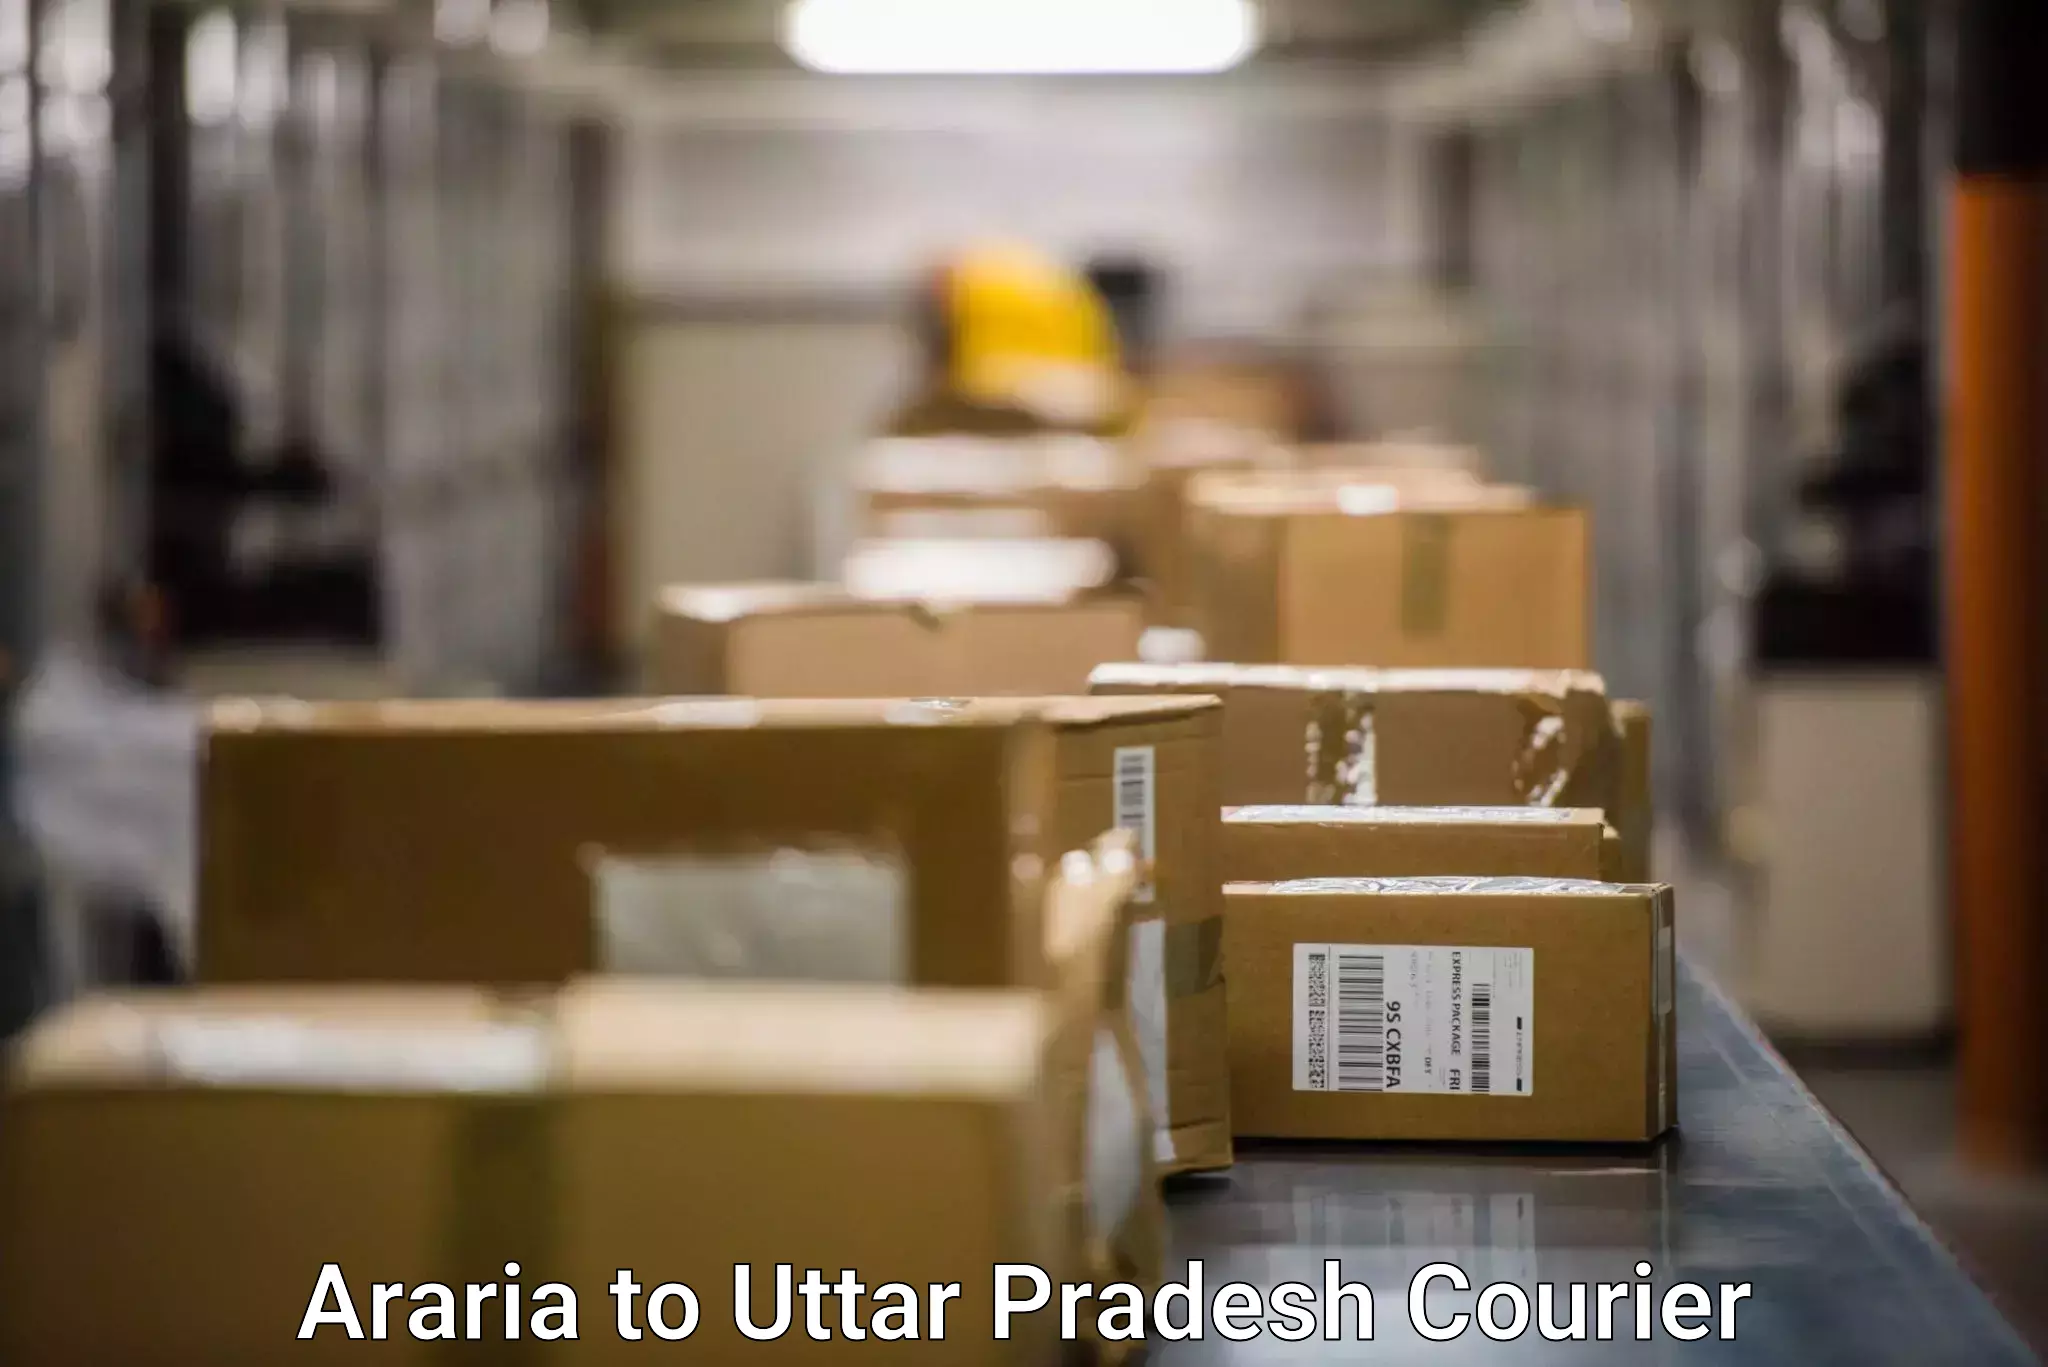 Express mail service Araria to Varanasi